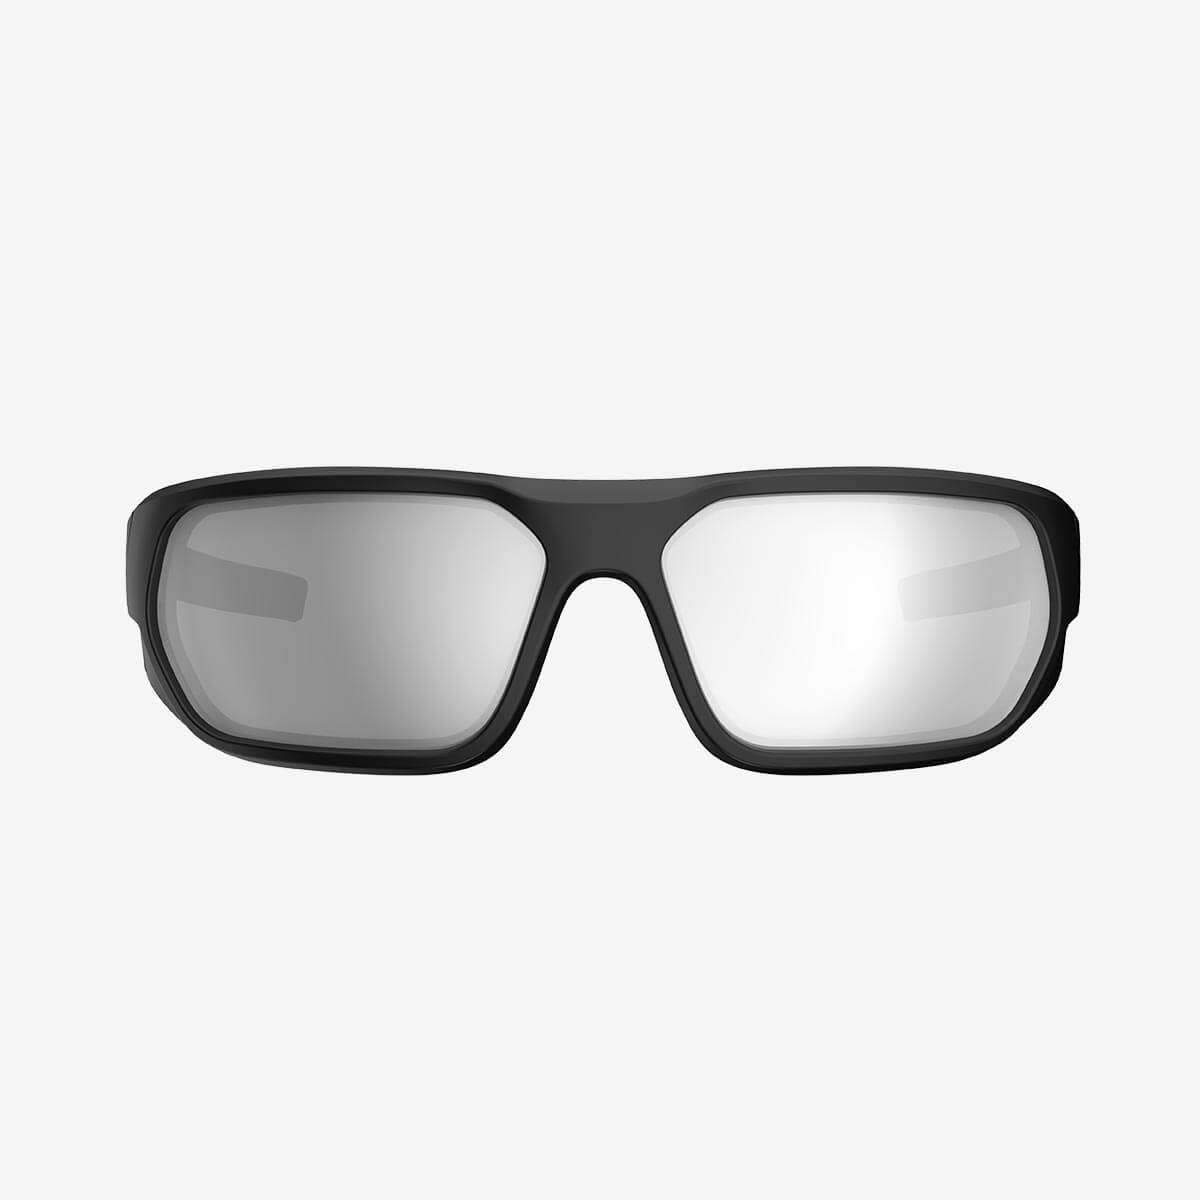 Magpul - Radius Eyewear, Polarized - Black Frame, Gray Lens/Silver Mirror